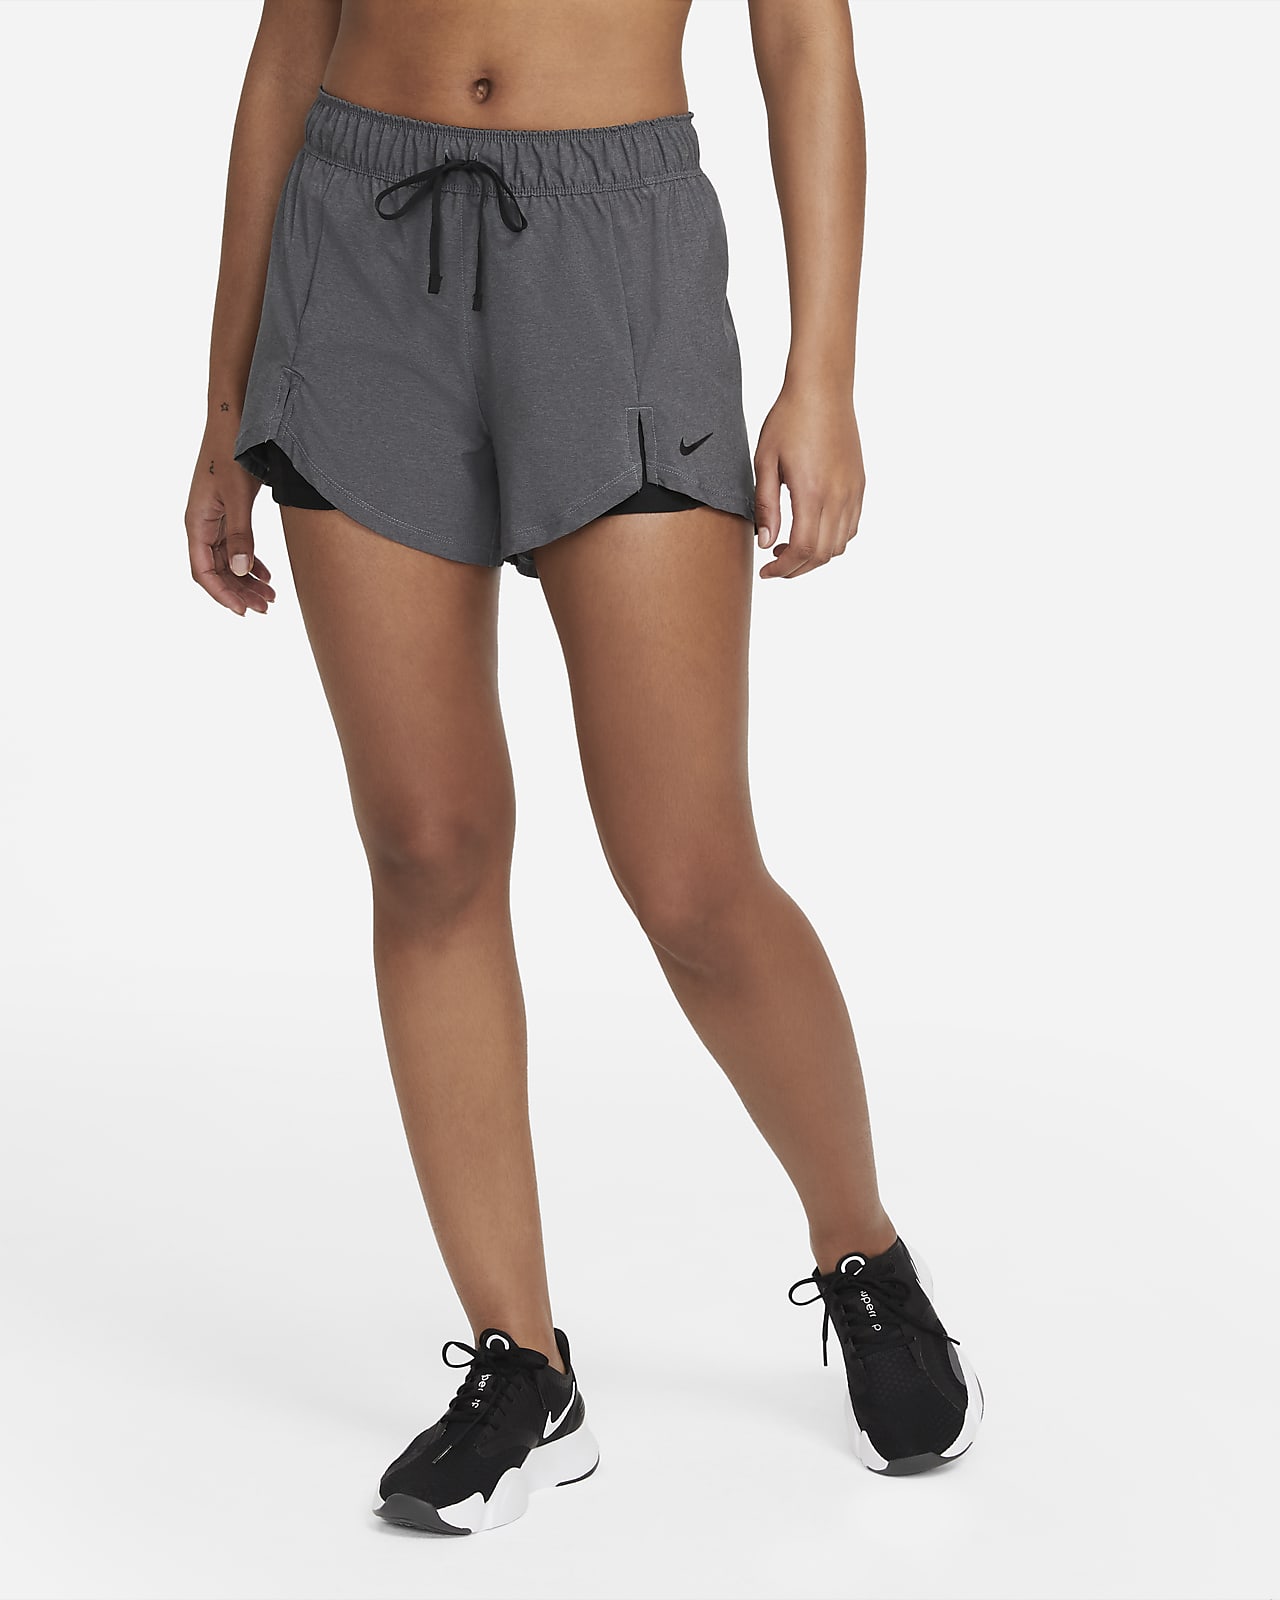 Espectacular de acuerdo a Tumor maligno Nike Flex Essential 2-in-1 Women's Training Shorts. Nike.com